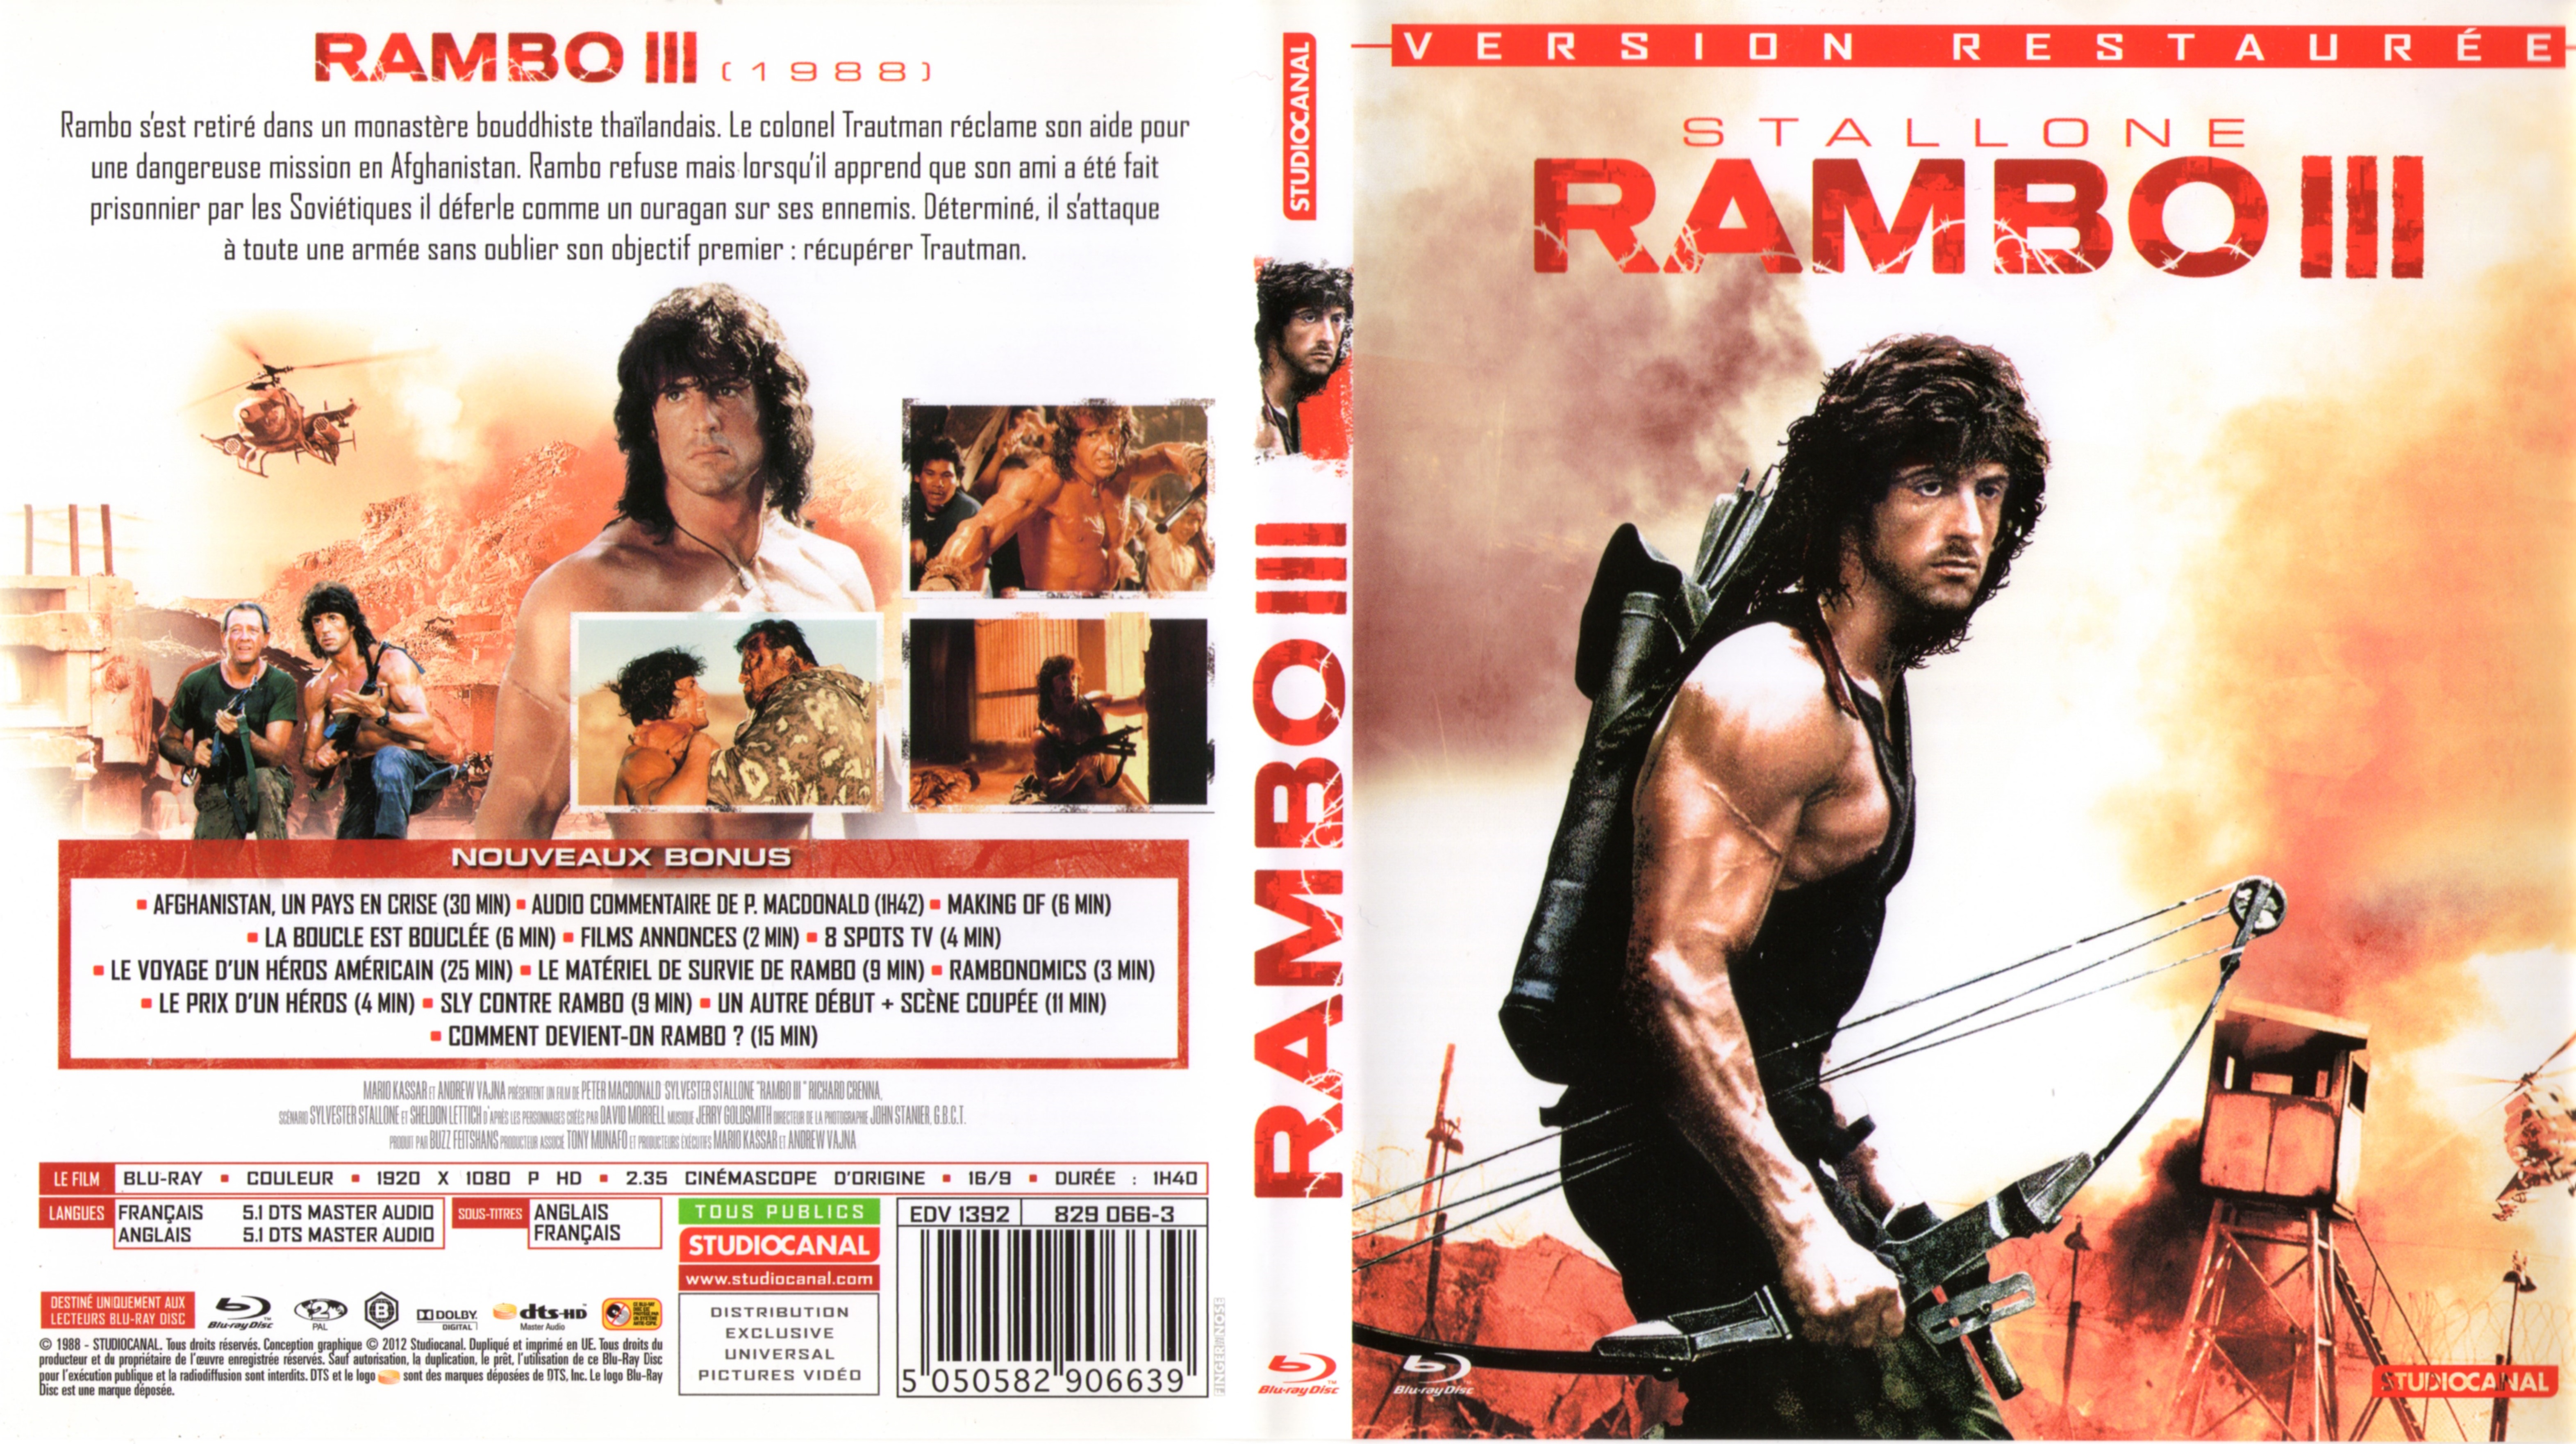 Jaquette DVD Rambo 3 (BLU-RAY) v2